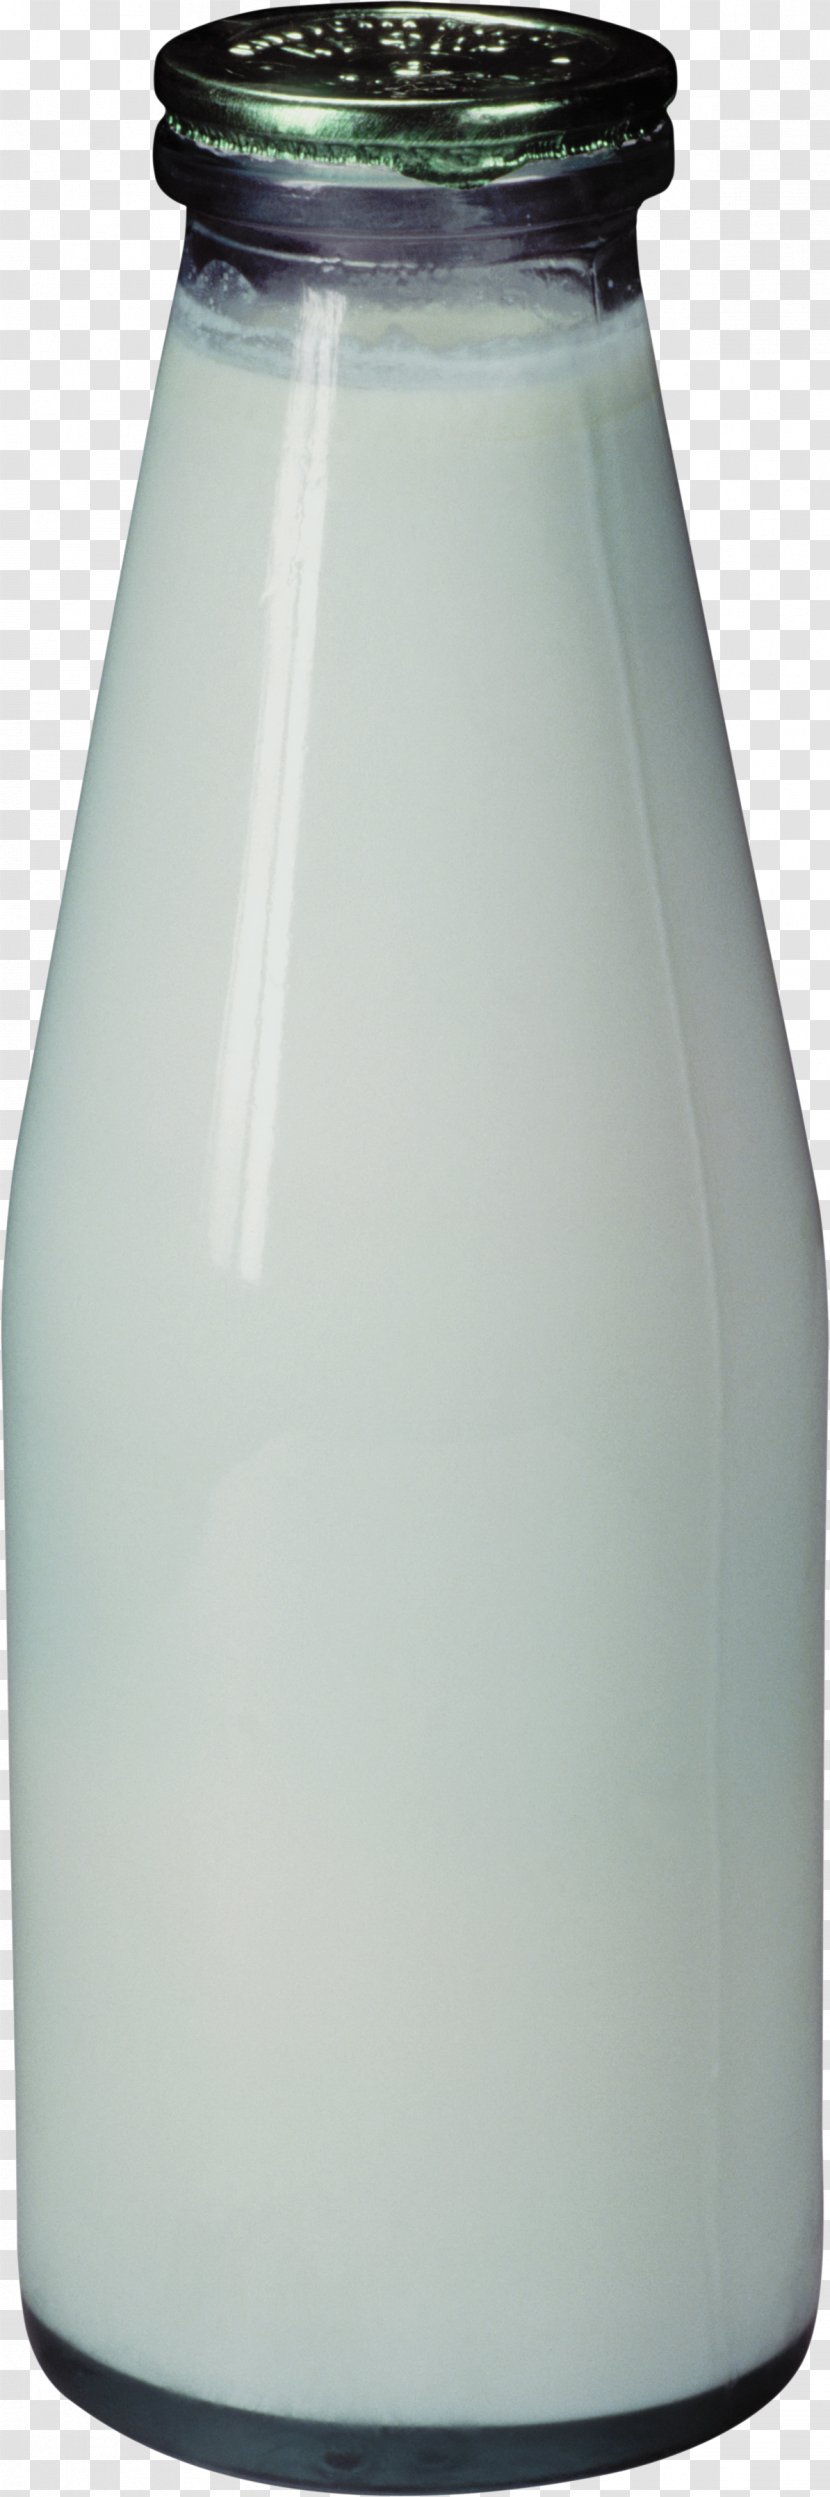 Milk Bottle Clip Art - Beer - Kefir Glass Transparent PNG